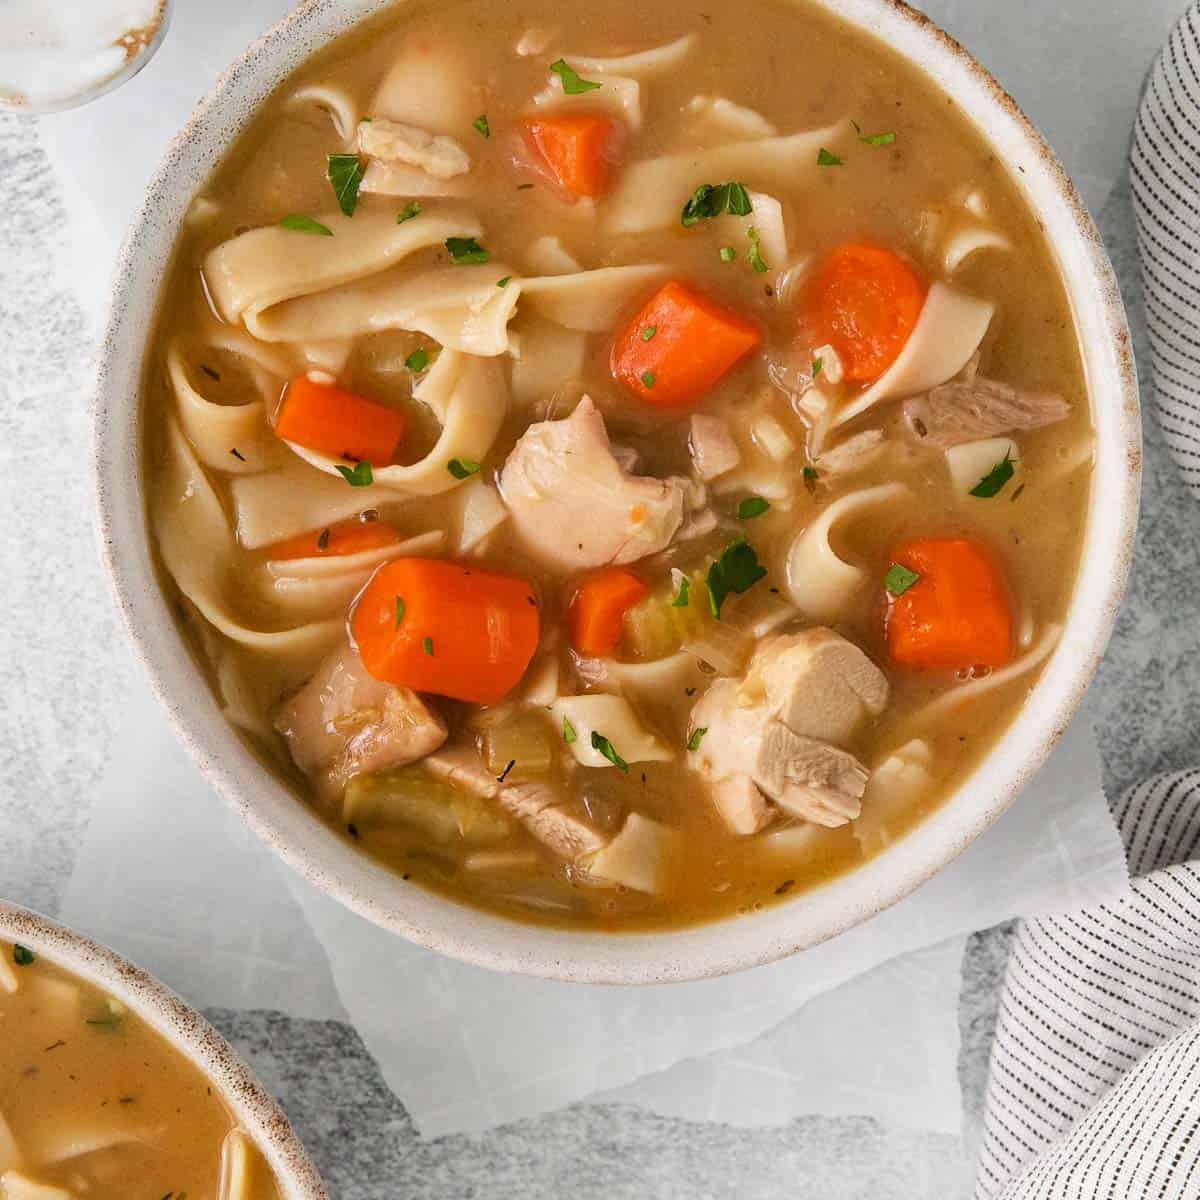 https://meaningfuleats.com/wp-content/uploads/2021/02/gluten-free-chicken-noodle-soup-3.jpg